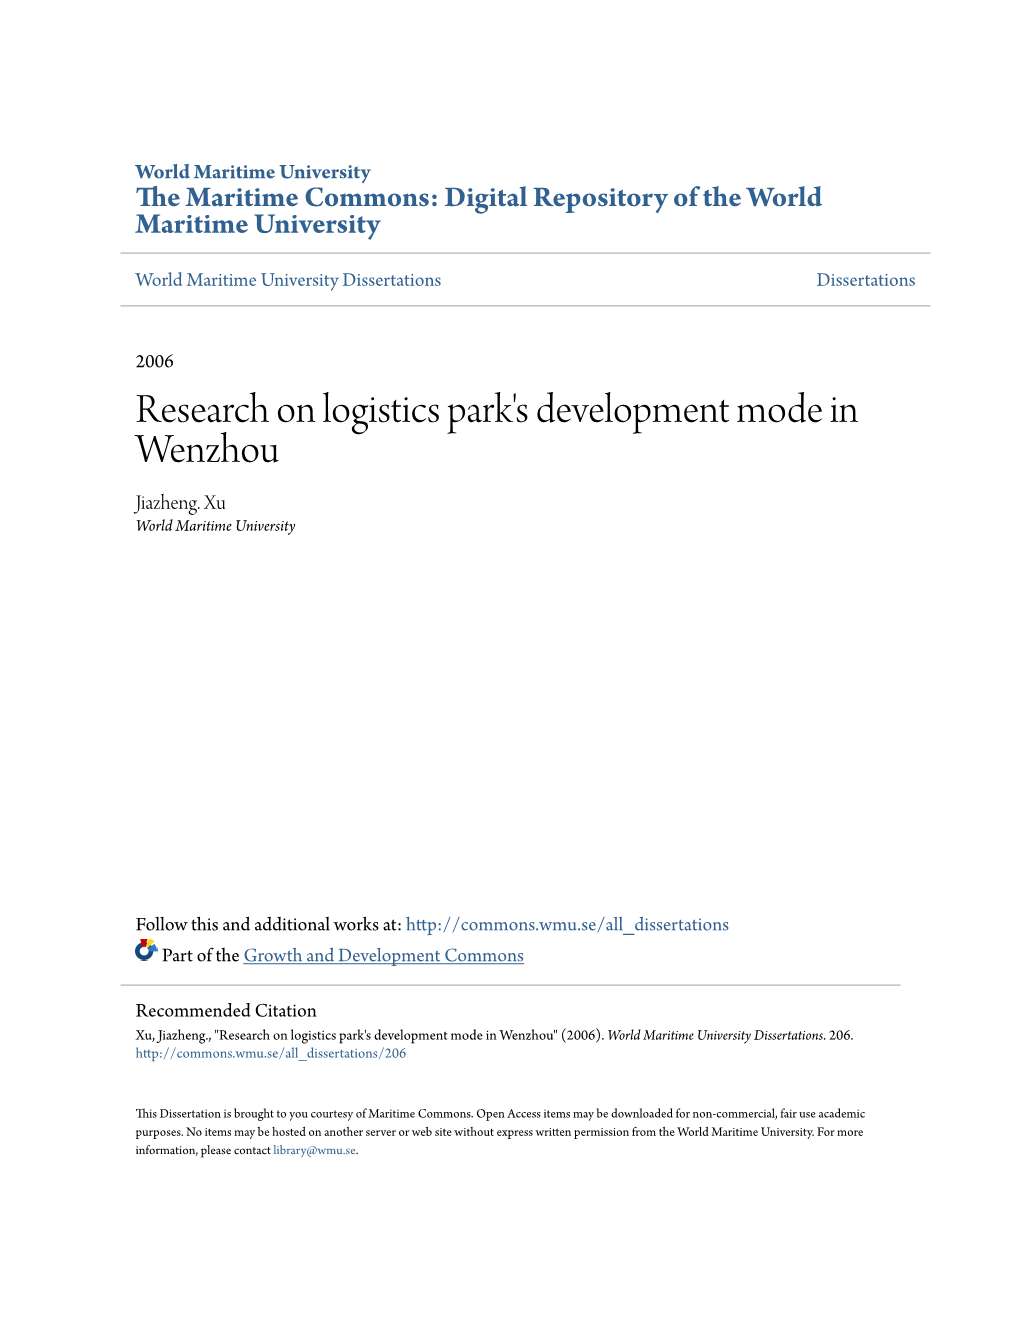 Research on Logistics Park's Development Mode in Wenzhou Jiazheng